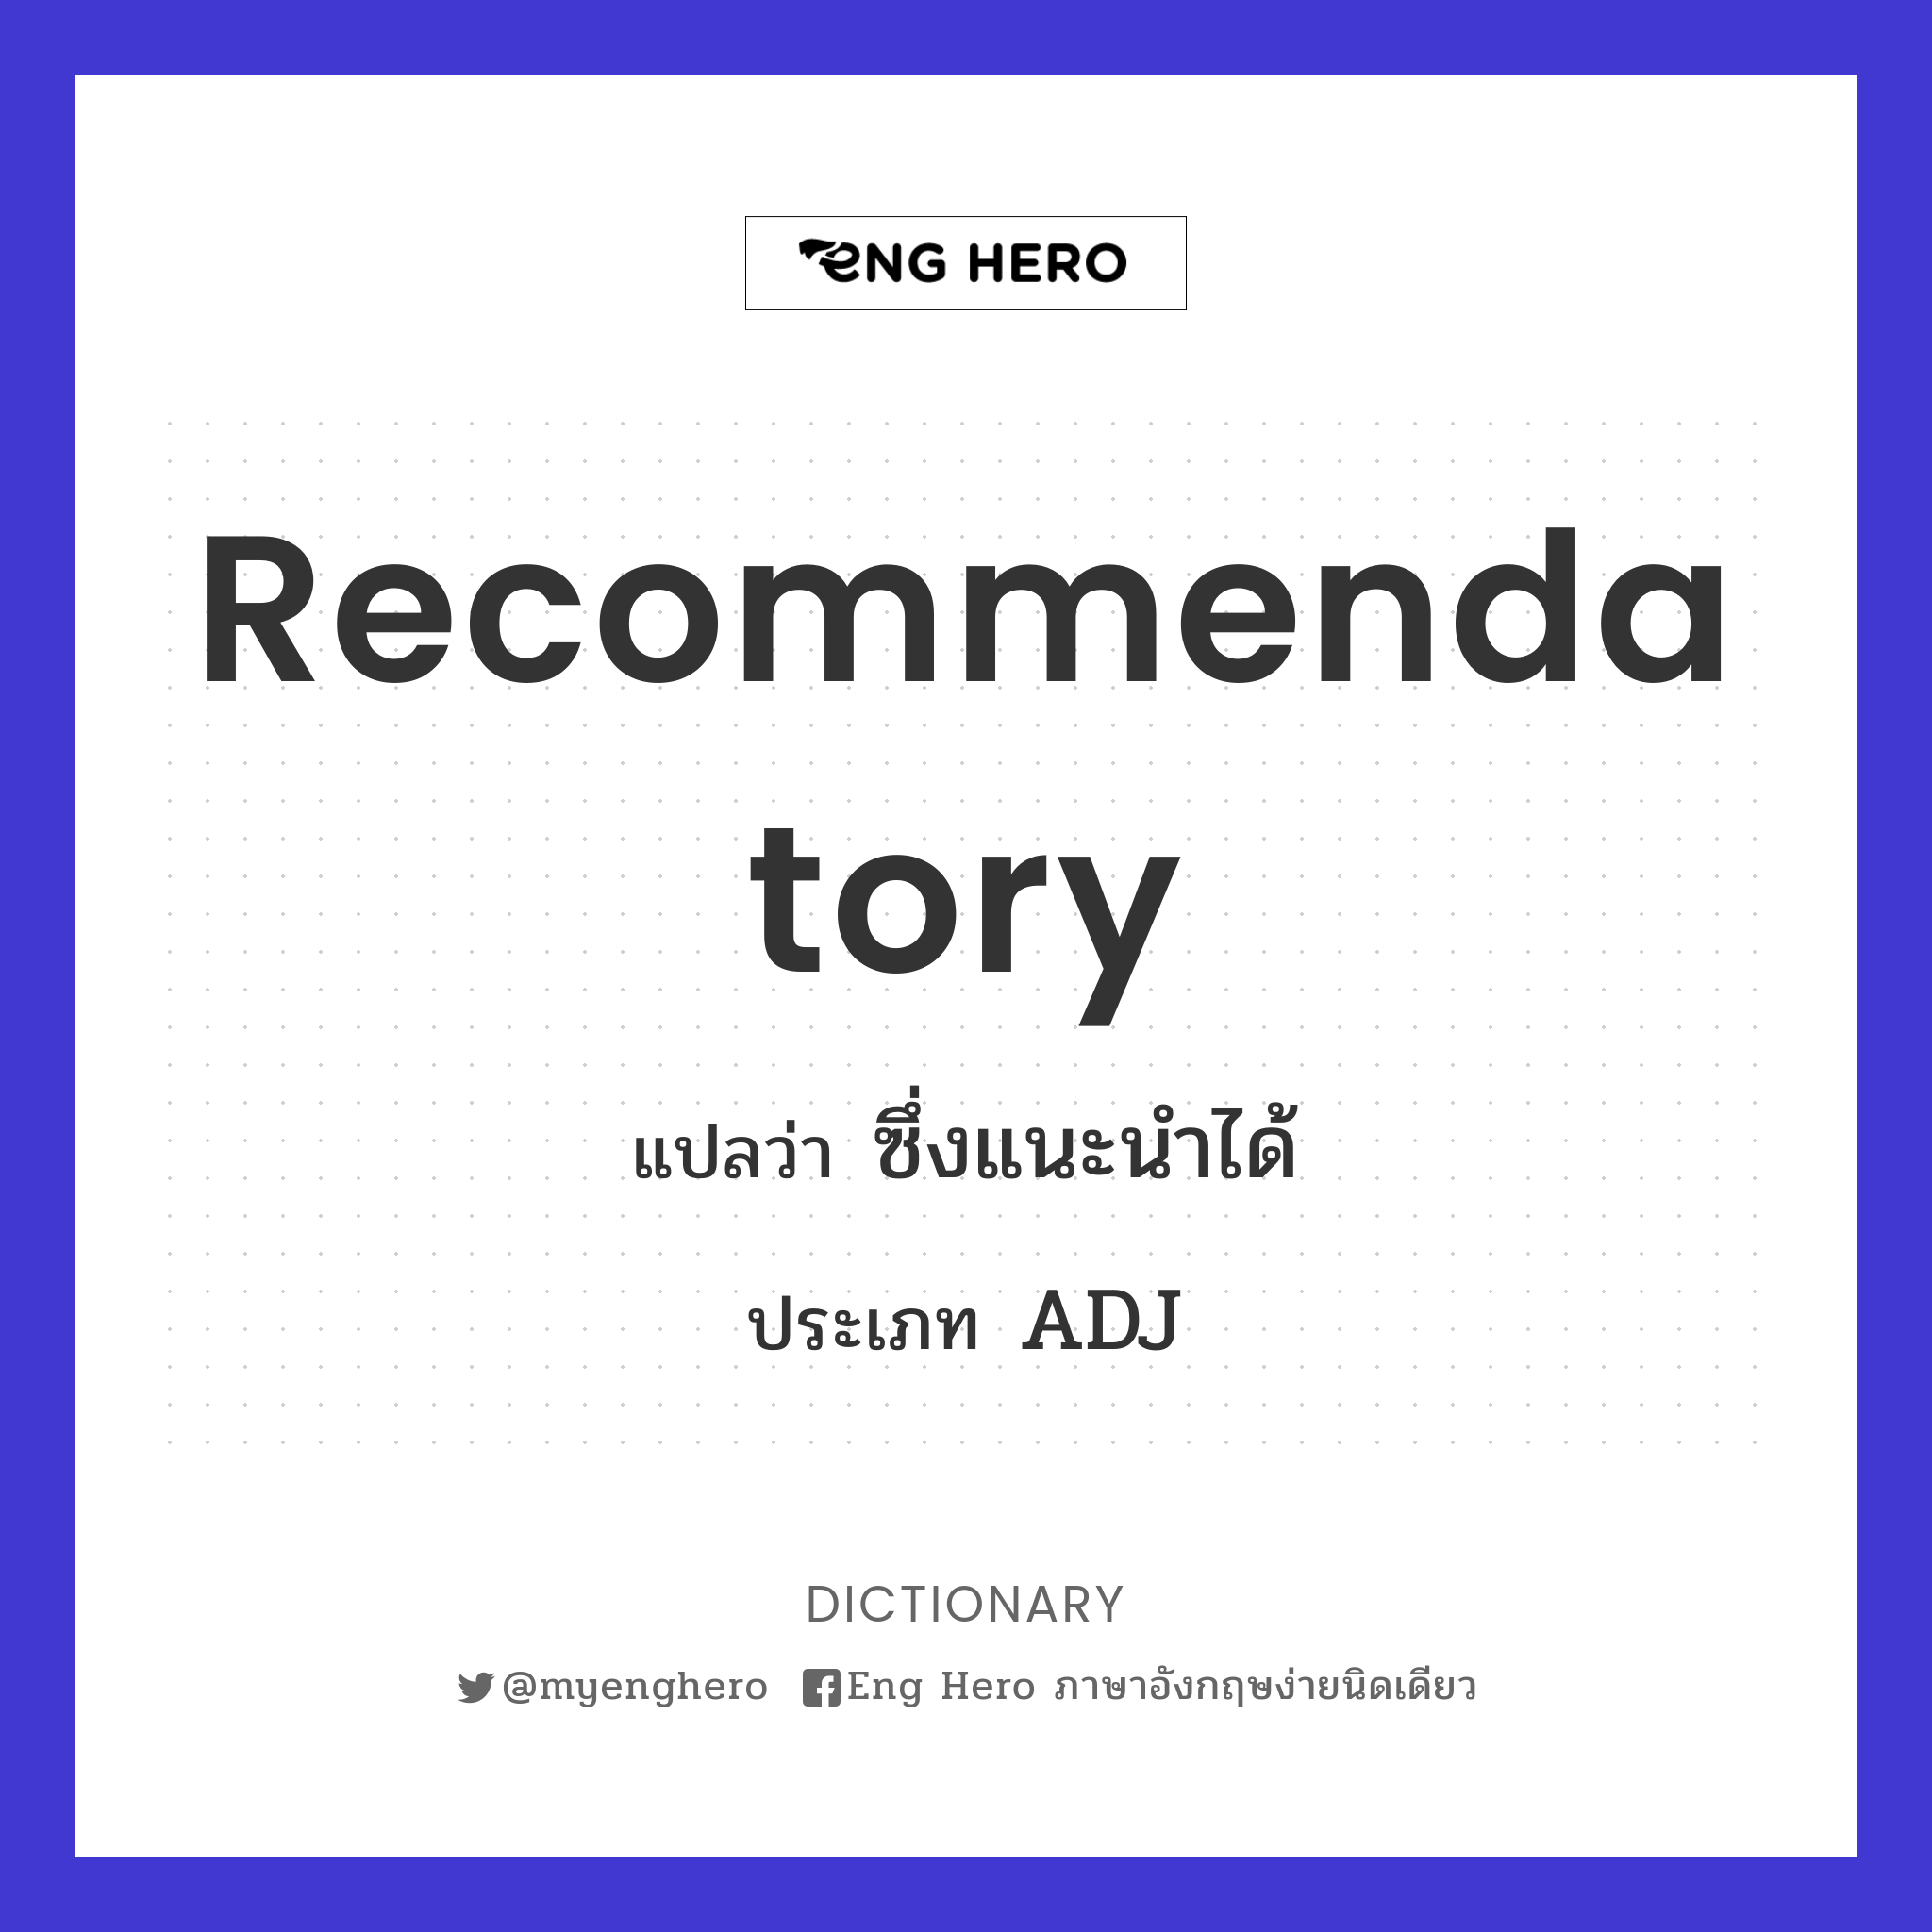 recommendatory